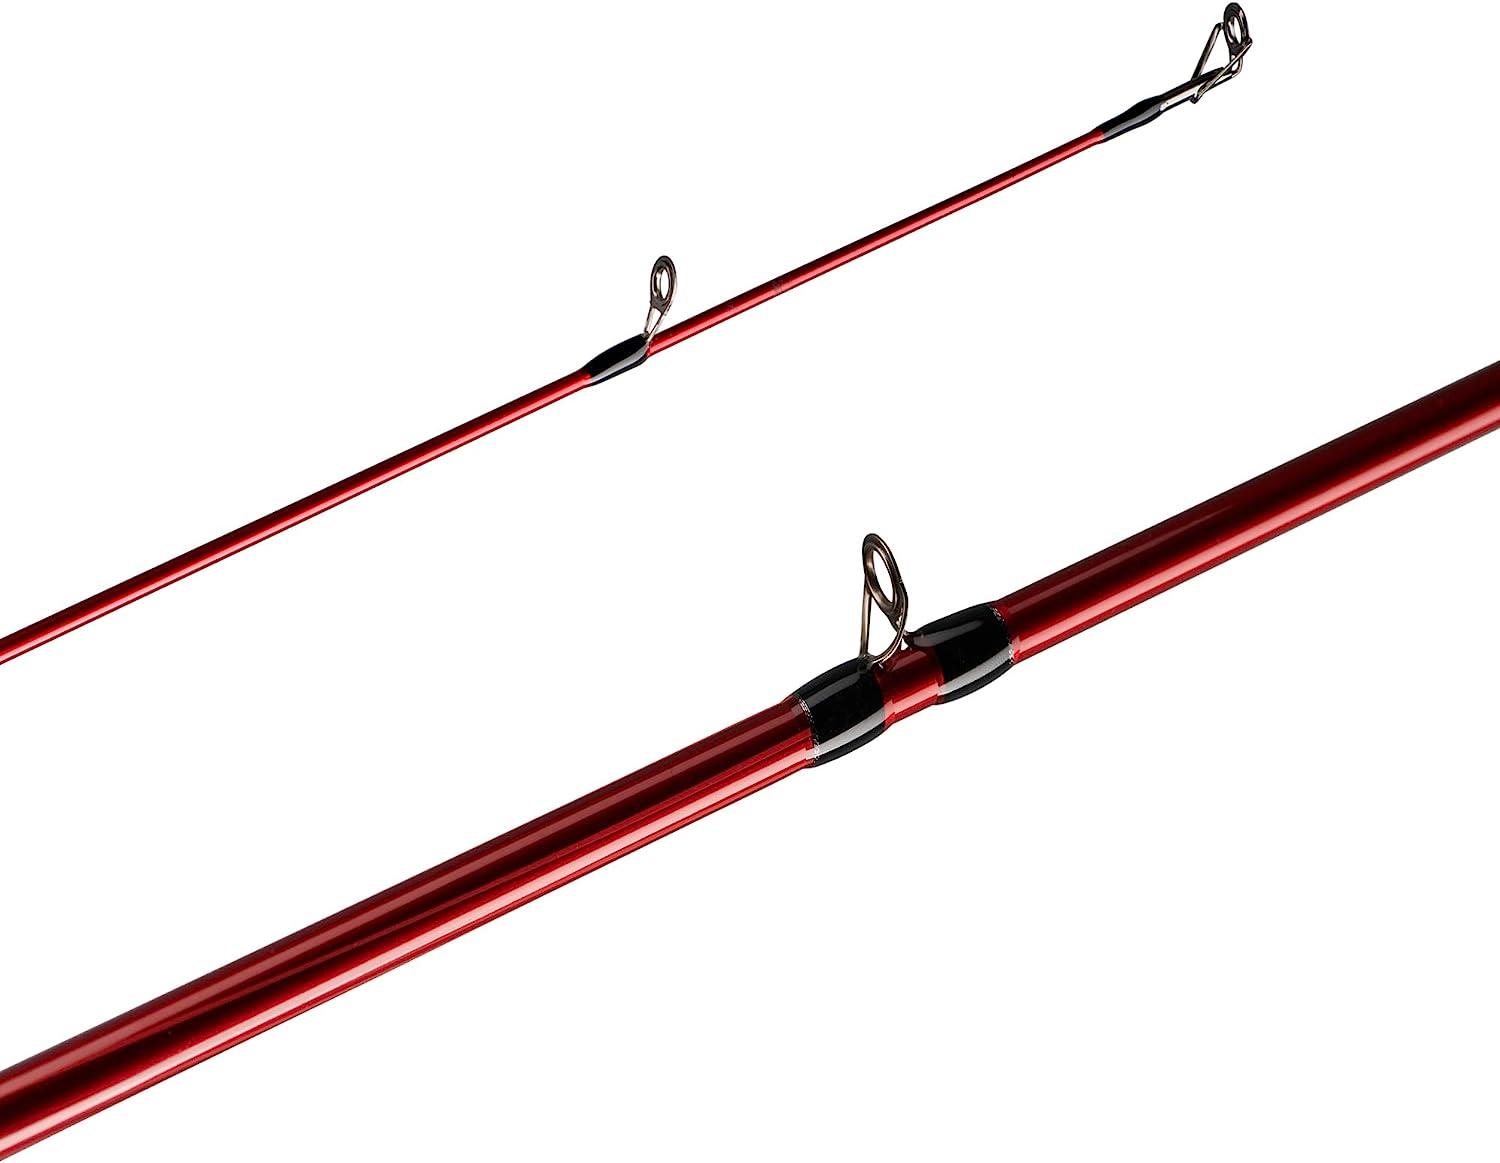 Berkley Cherrywood HD Casting Fishing Rods New Model 6'6 - Medium - 2pc